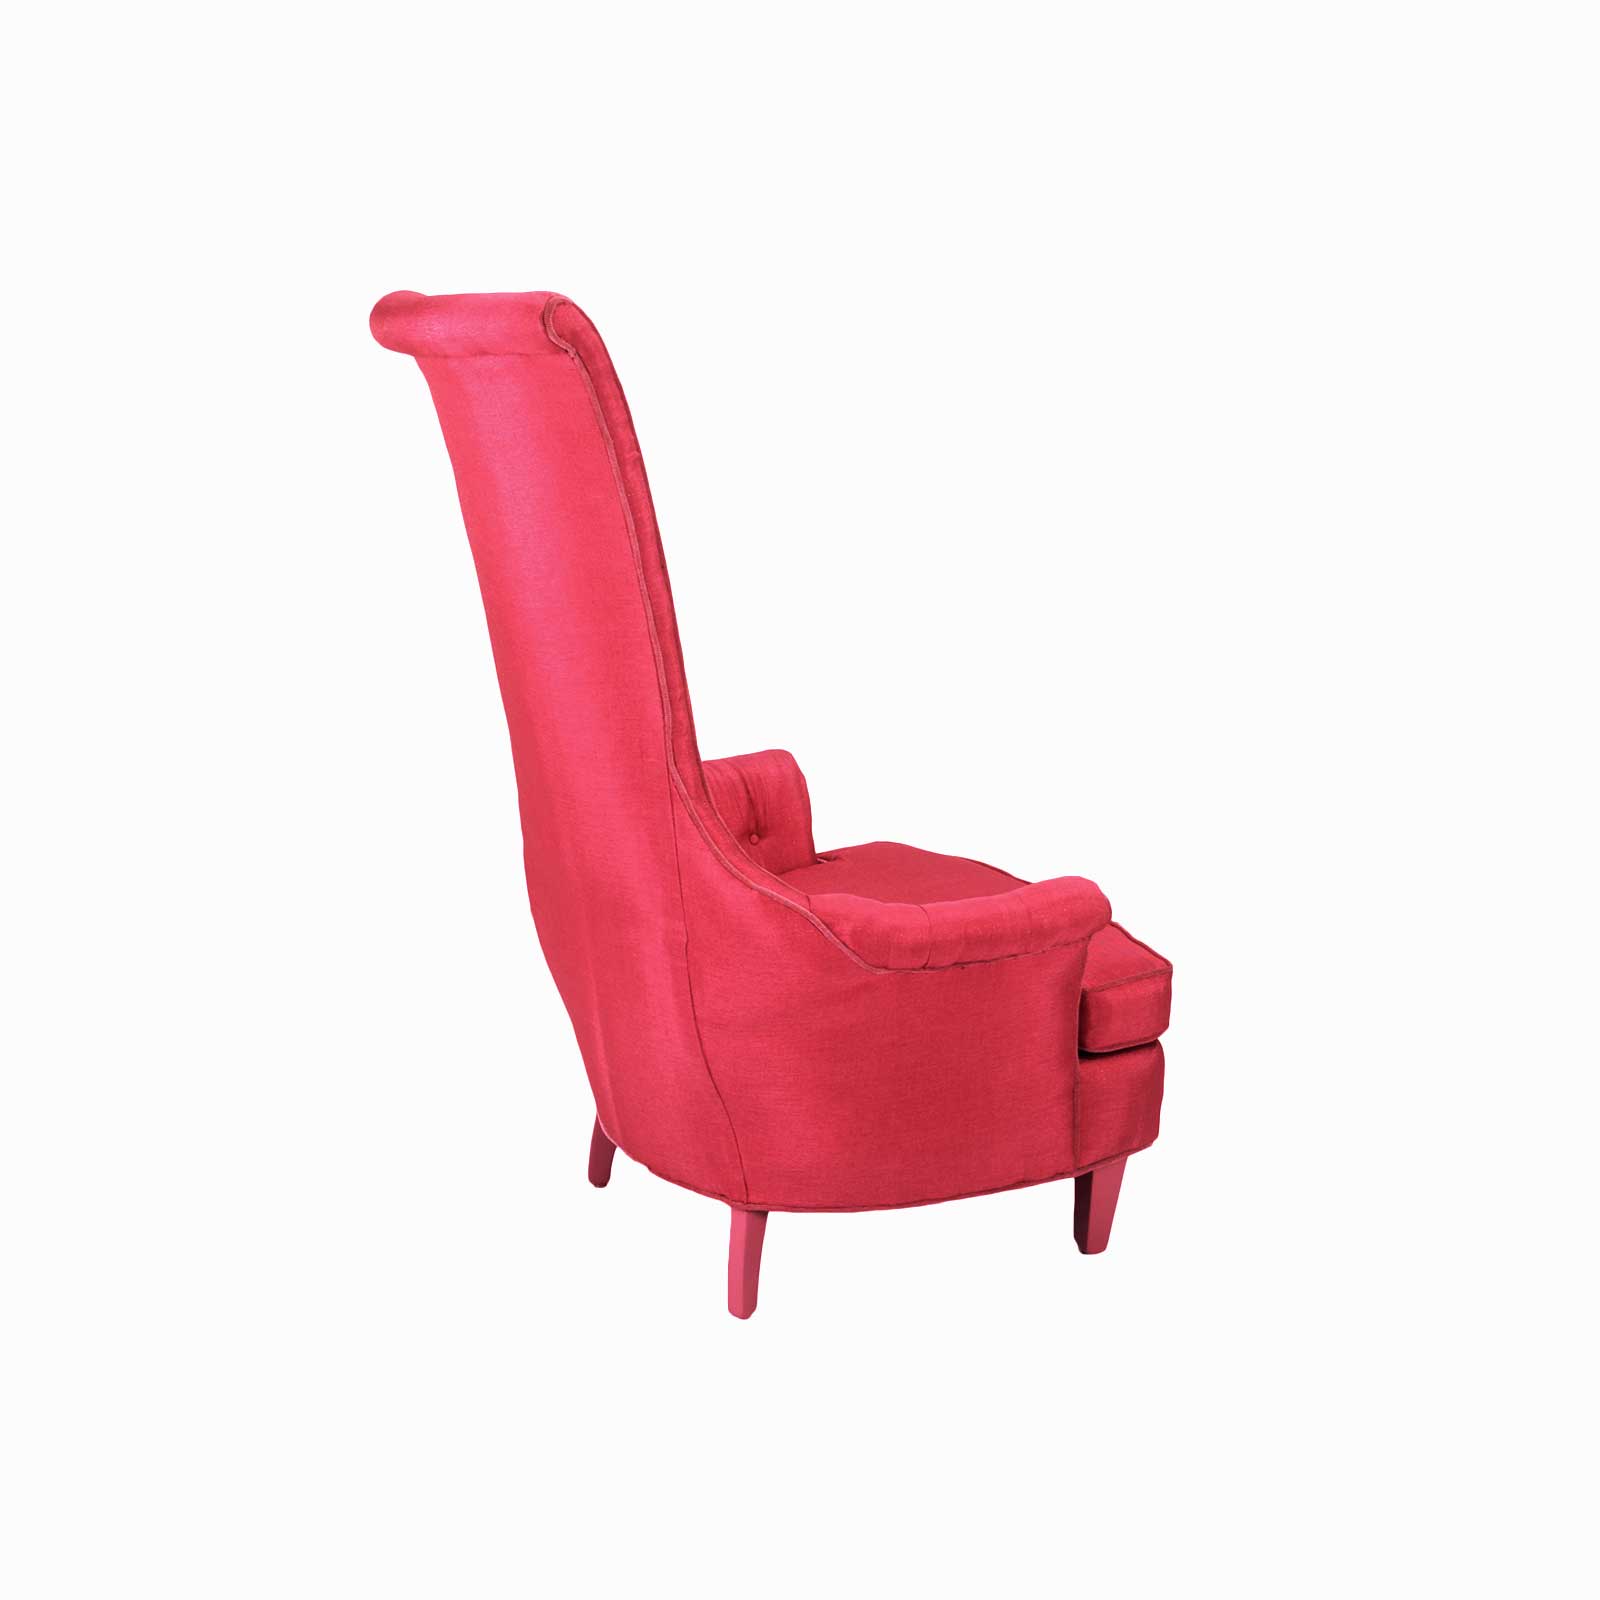 Pink Lounge Chair Rentals Event Furniture Rental